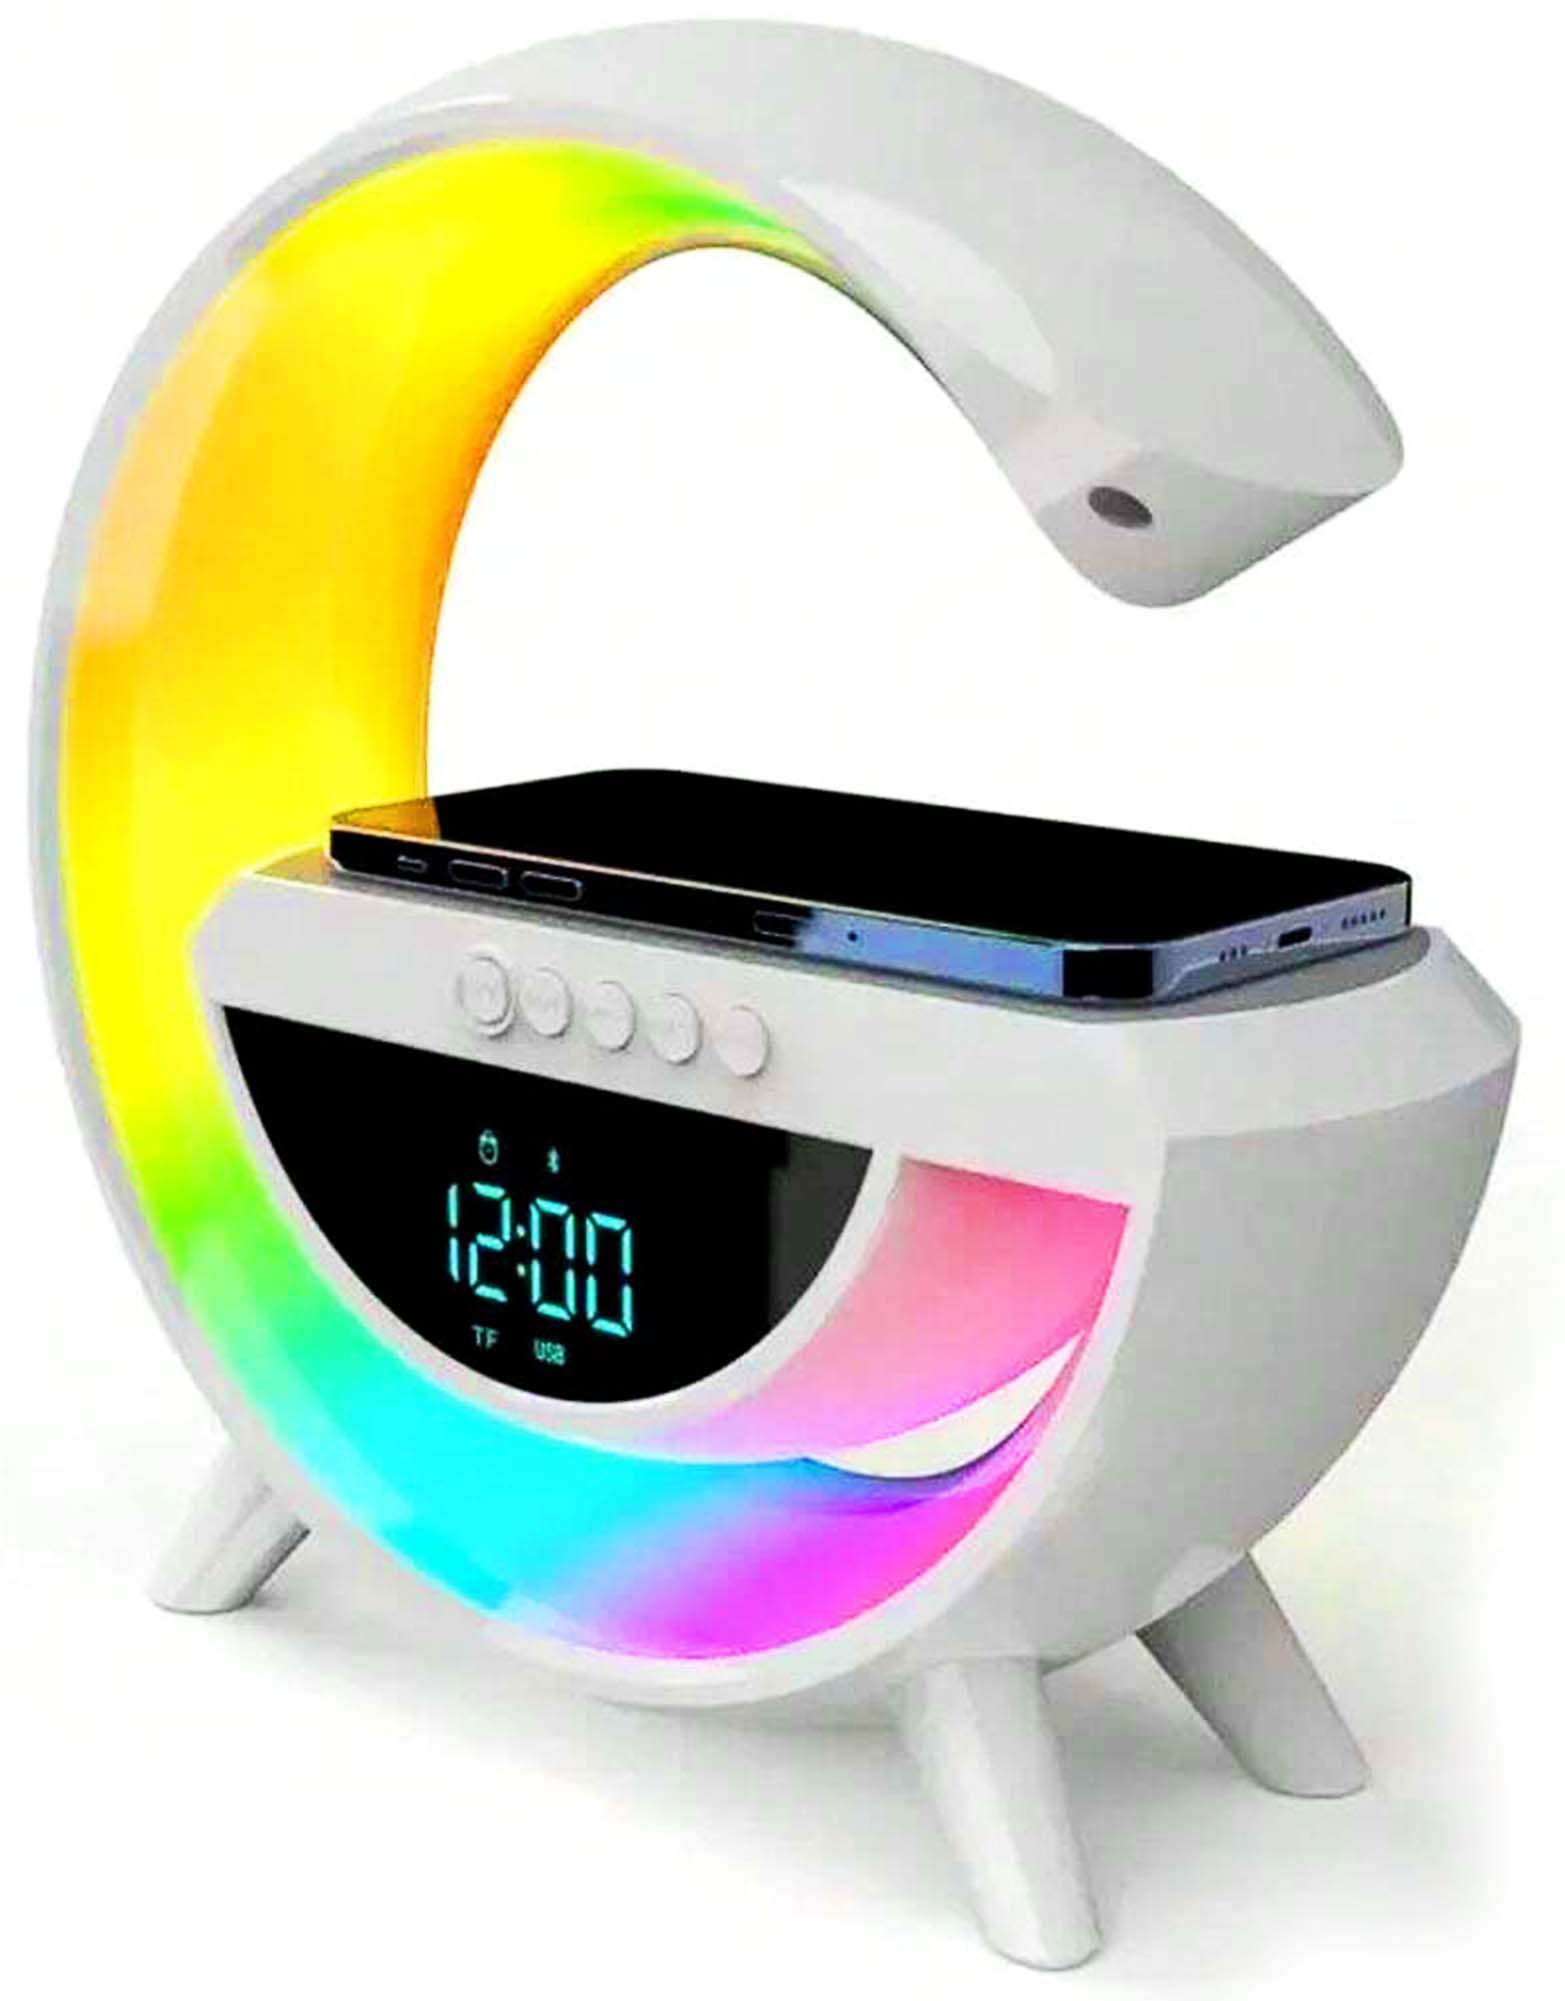 5v1 Chytrá bezdrátová nabíječka s Bluetooth reproduktorem a barevným LED osvětlením